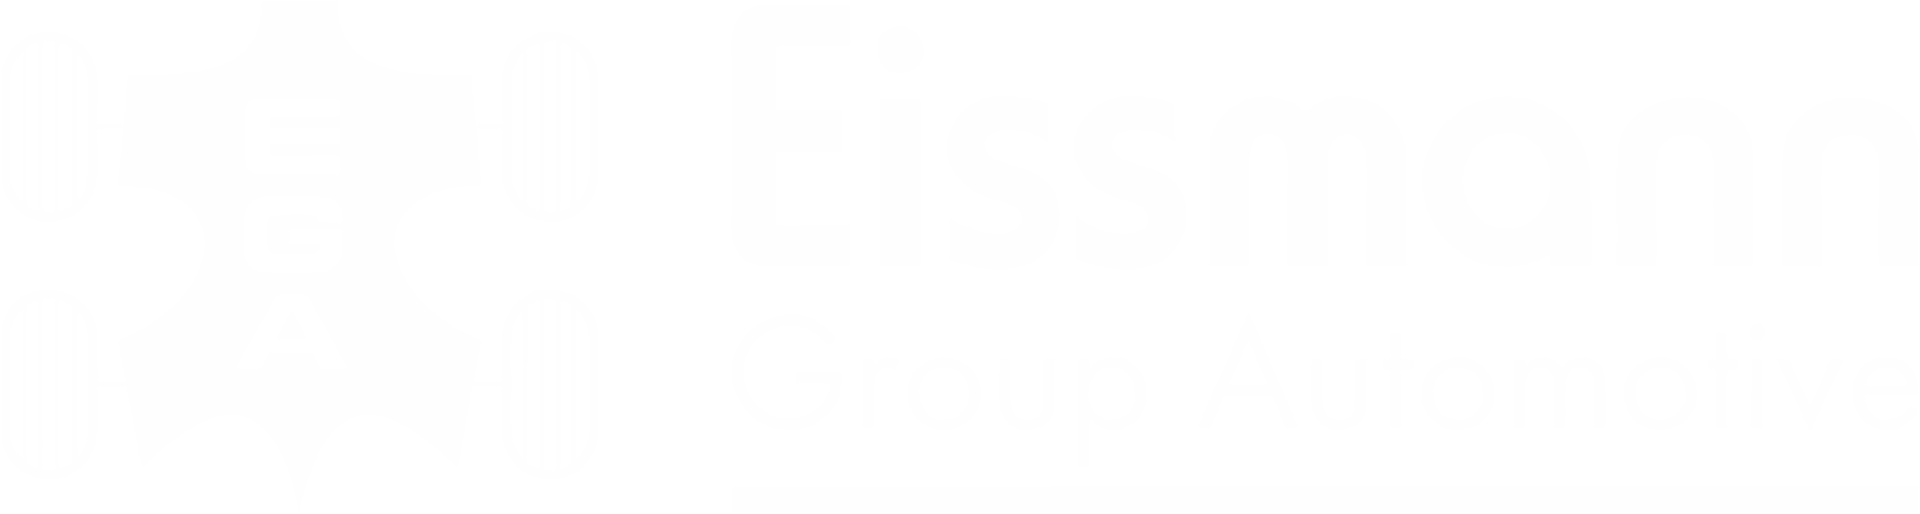 Eissman Group Automotive